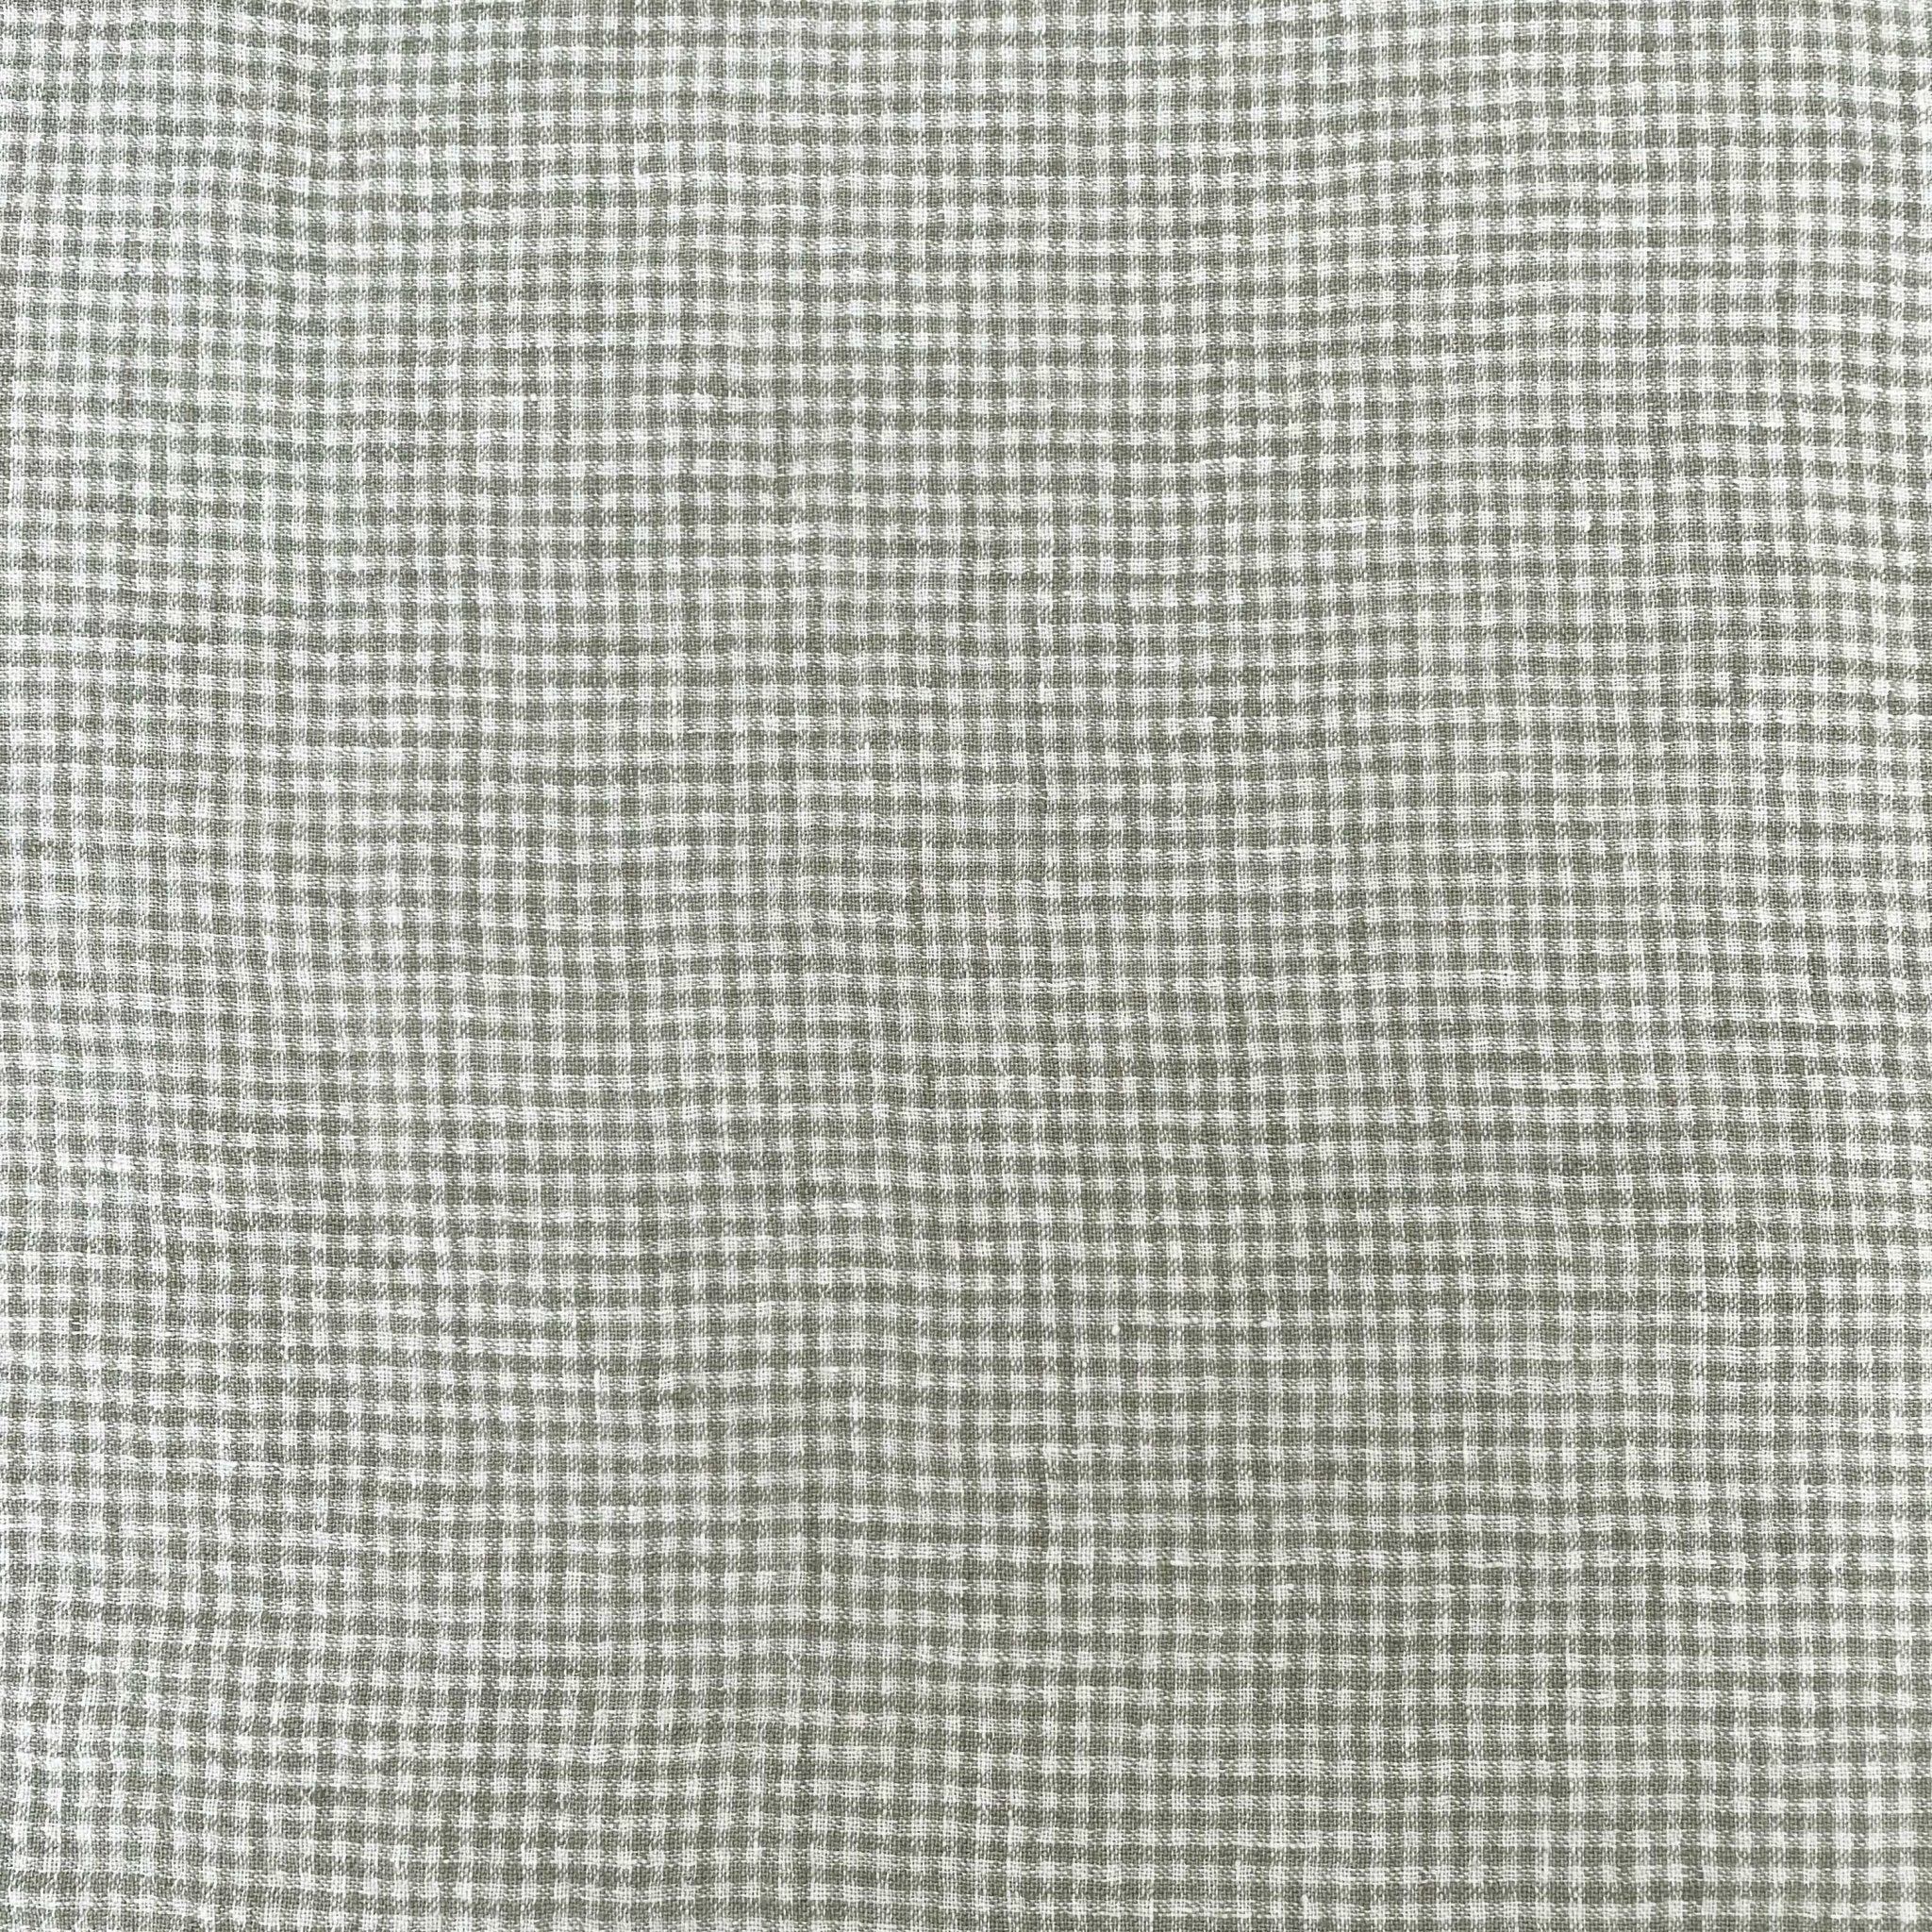 Linen Fabric Seersucker Gingham Check 7328 7329 - The Linen Lab - Khaki